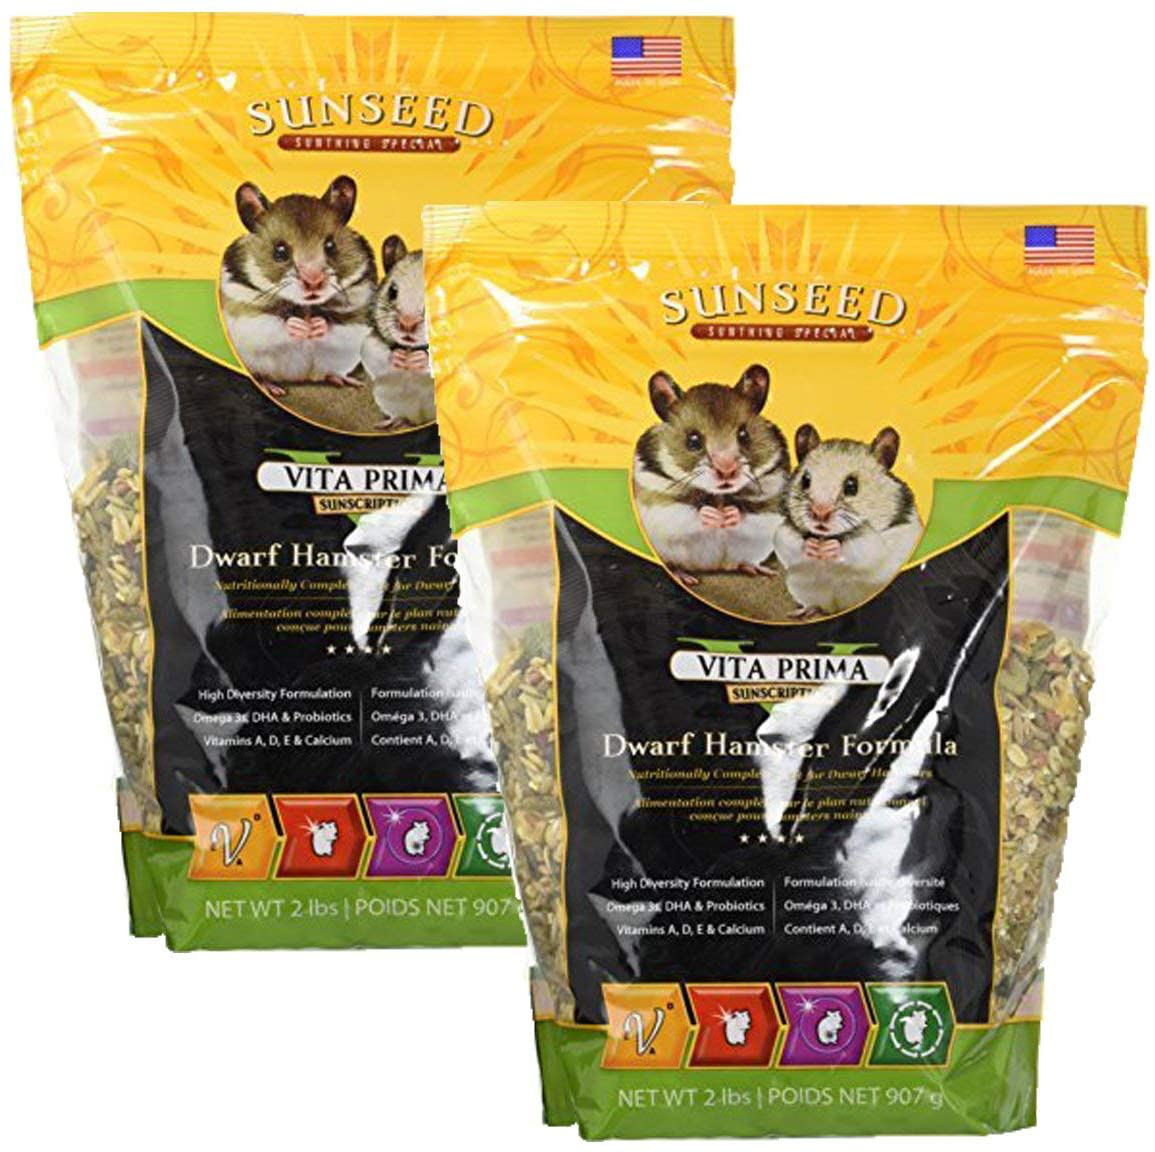 Sunseed Vita Prima Sunscription Dwarf Hamster Formula (2 Lb / 2 Pack) Animals & Pet Supplies > Pet Supplies > Small Animal Supplies > Small Animal Food Sunseed Company   